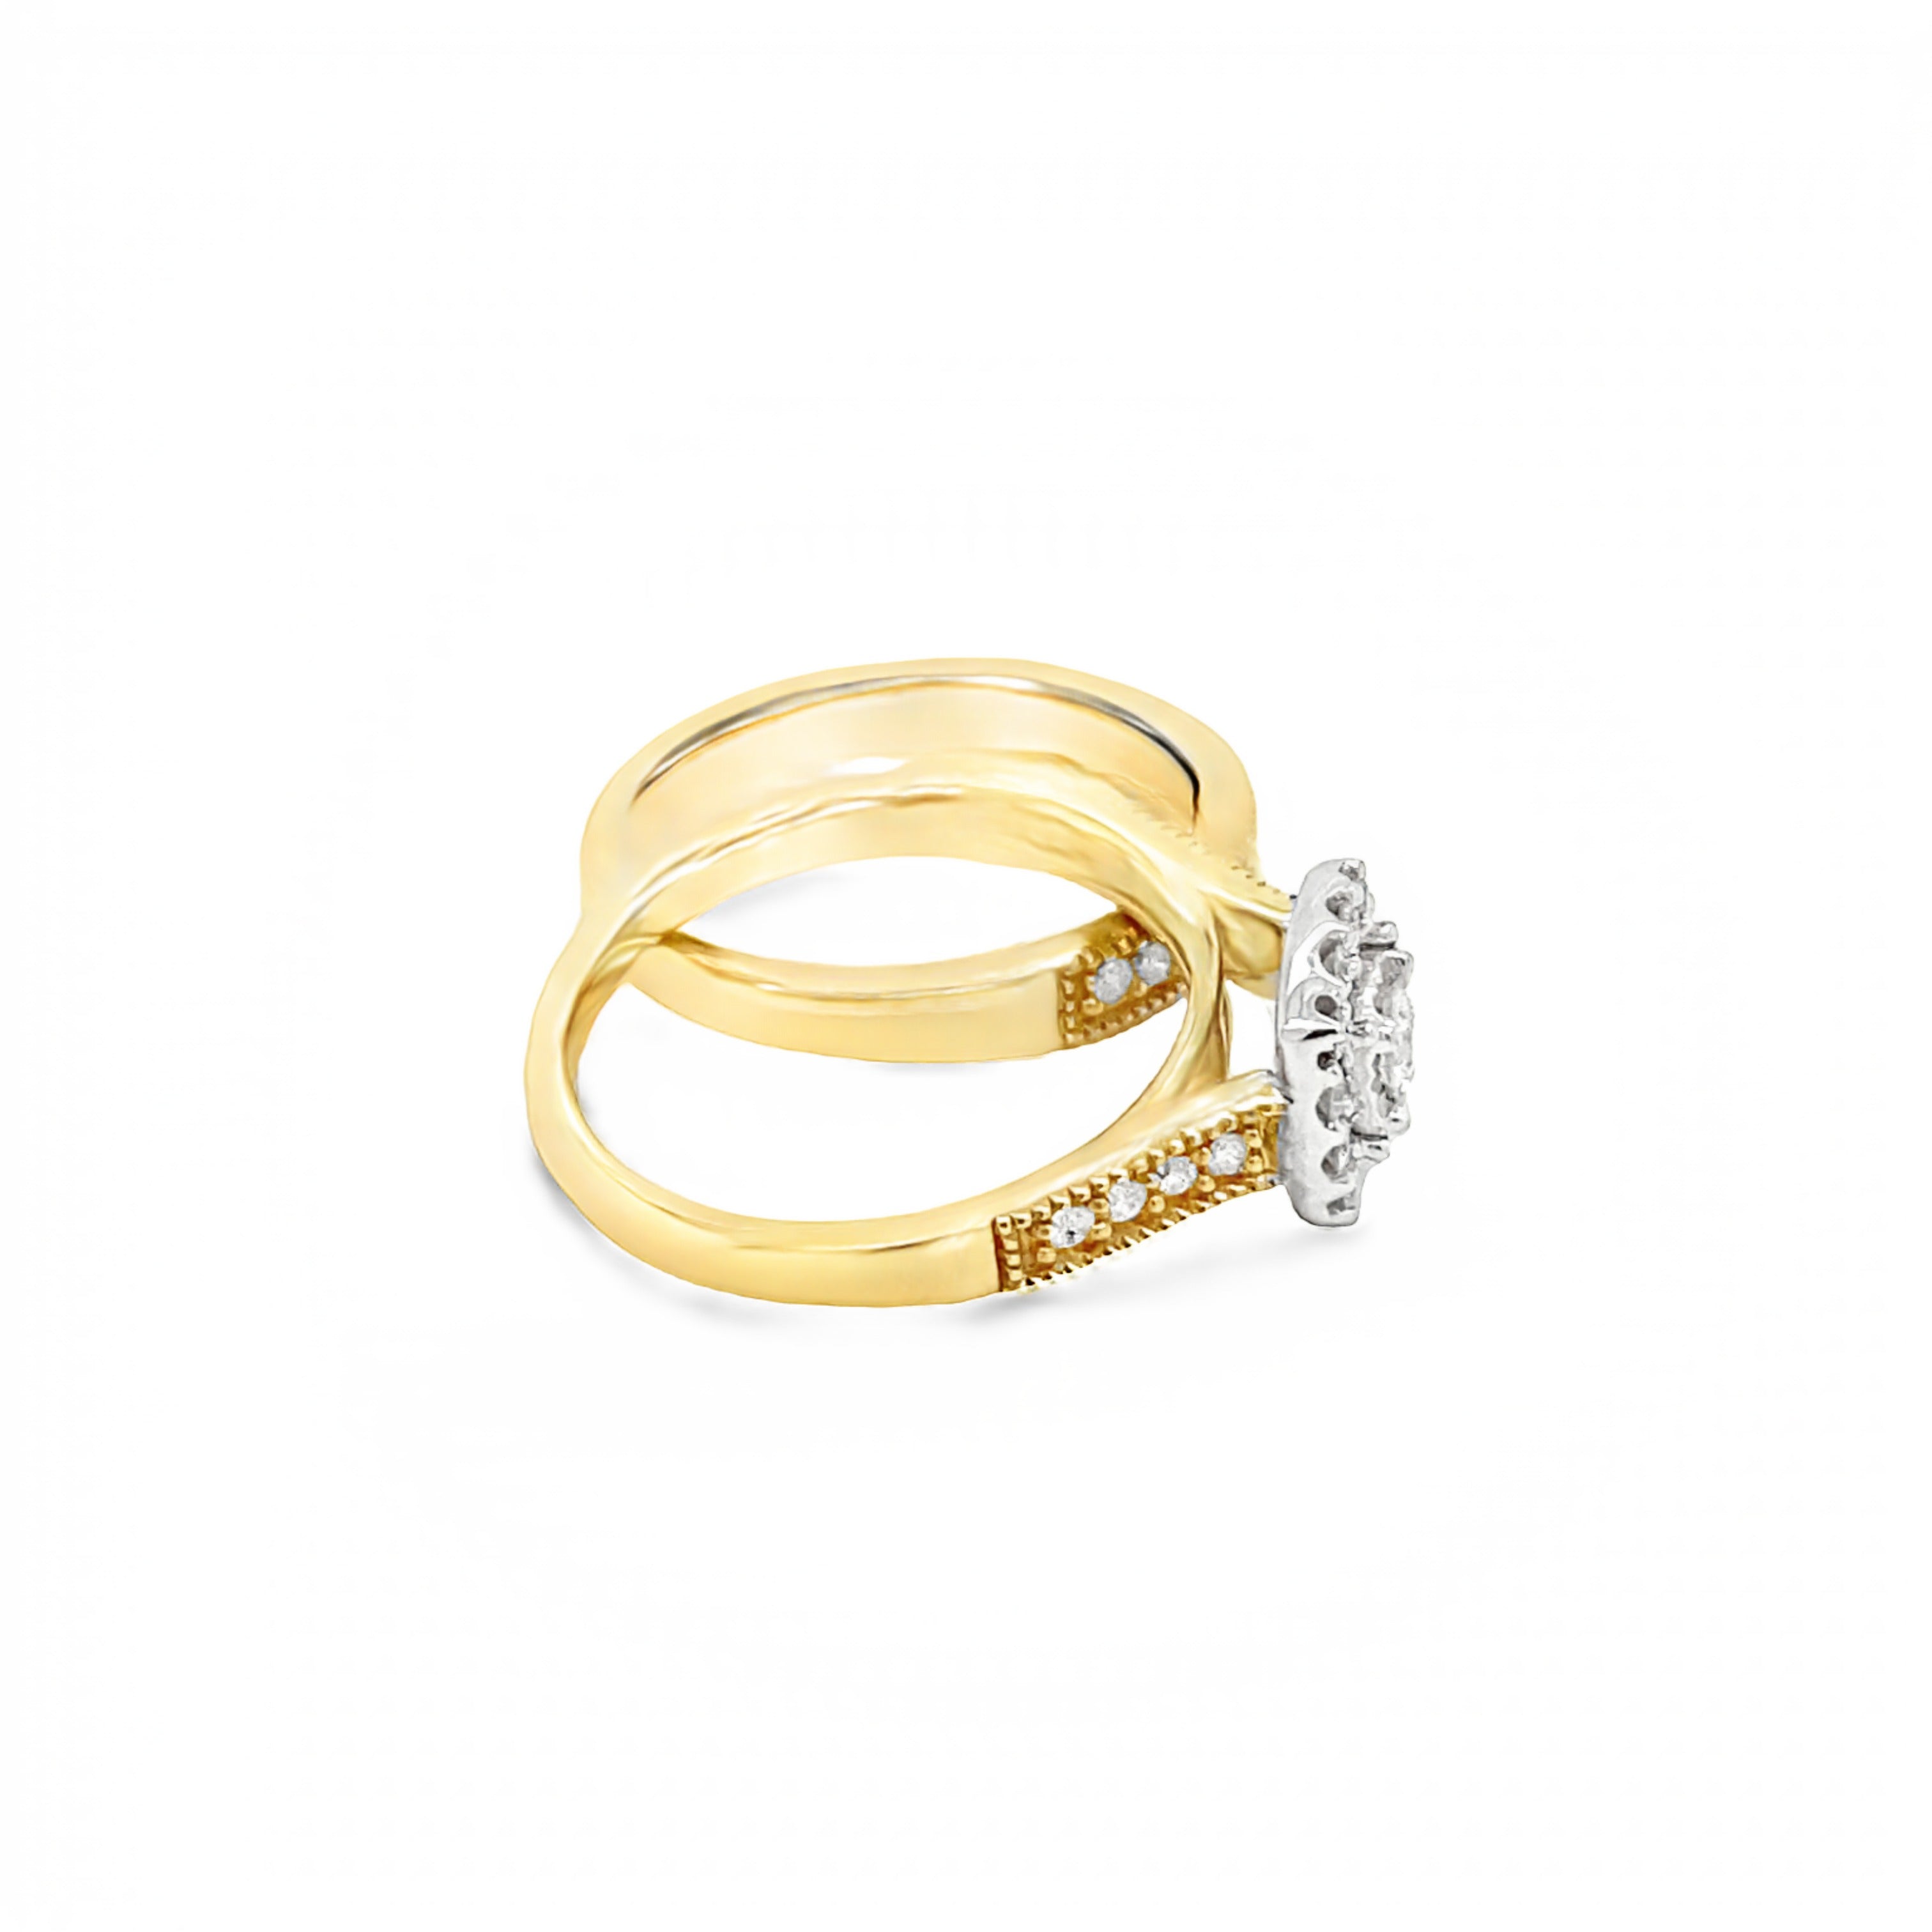 10ct Yellow and White Gold Halo Diamond Ring Set